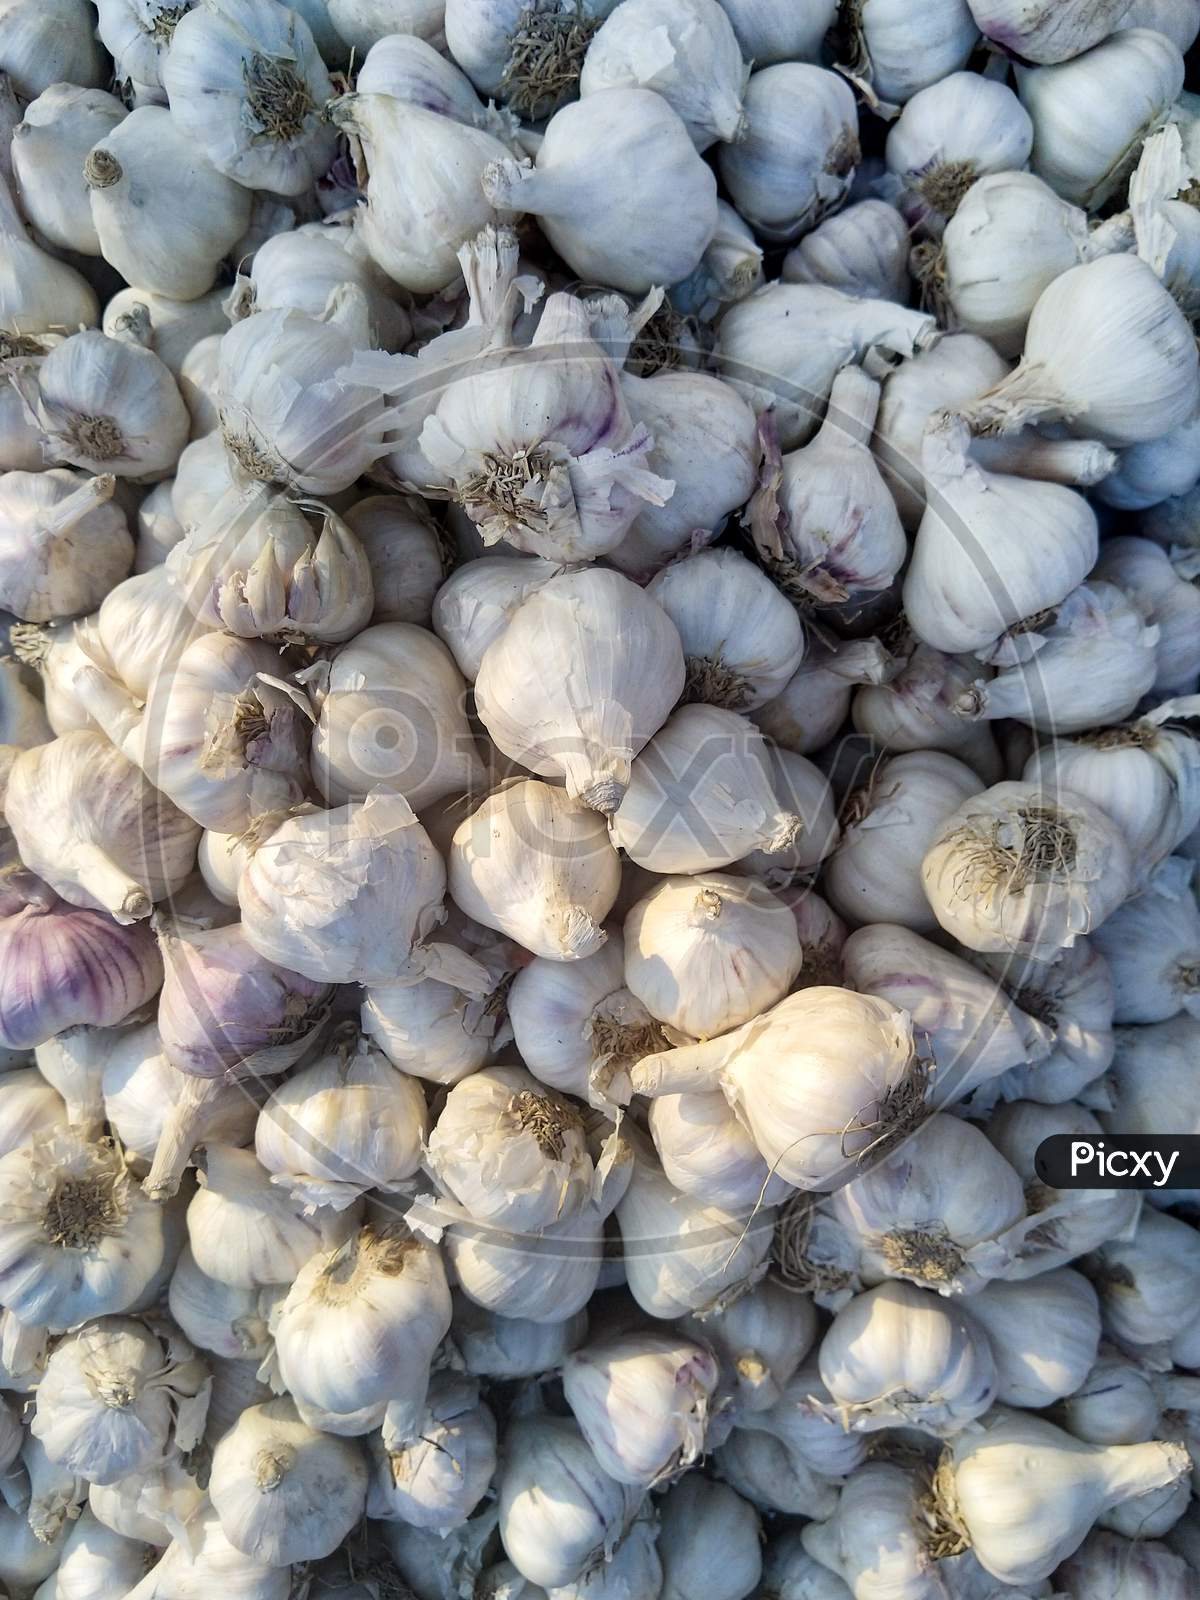 Garlic For Sale In Market